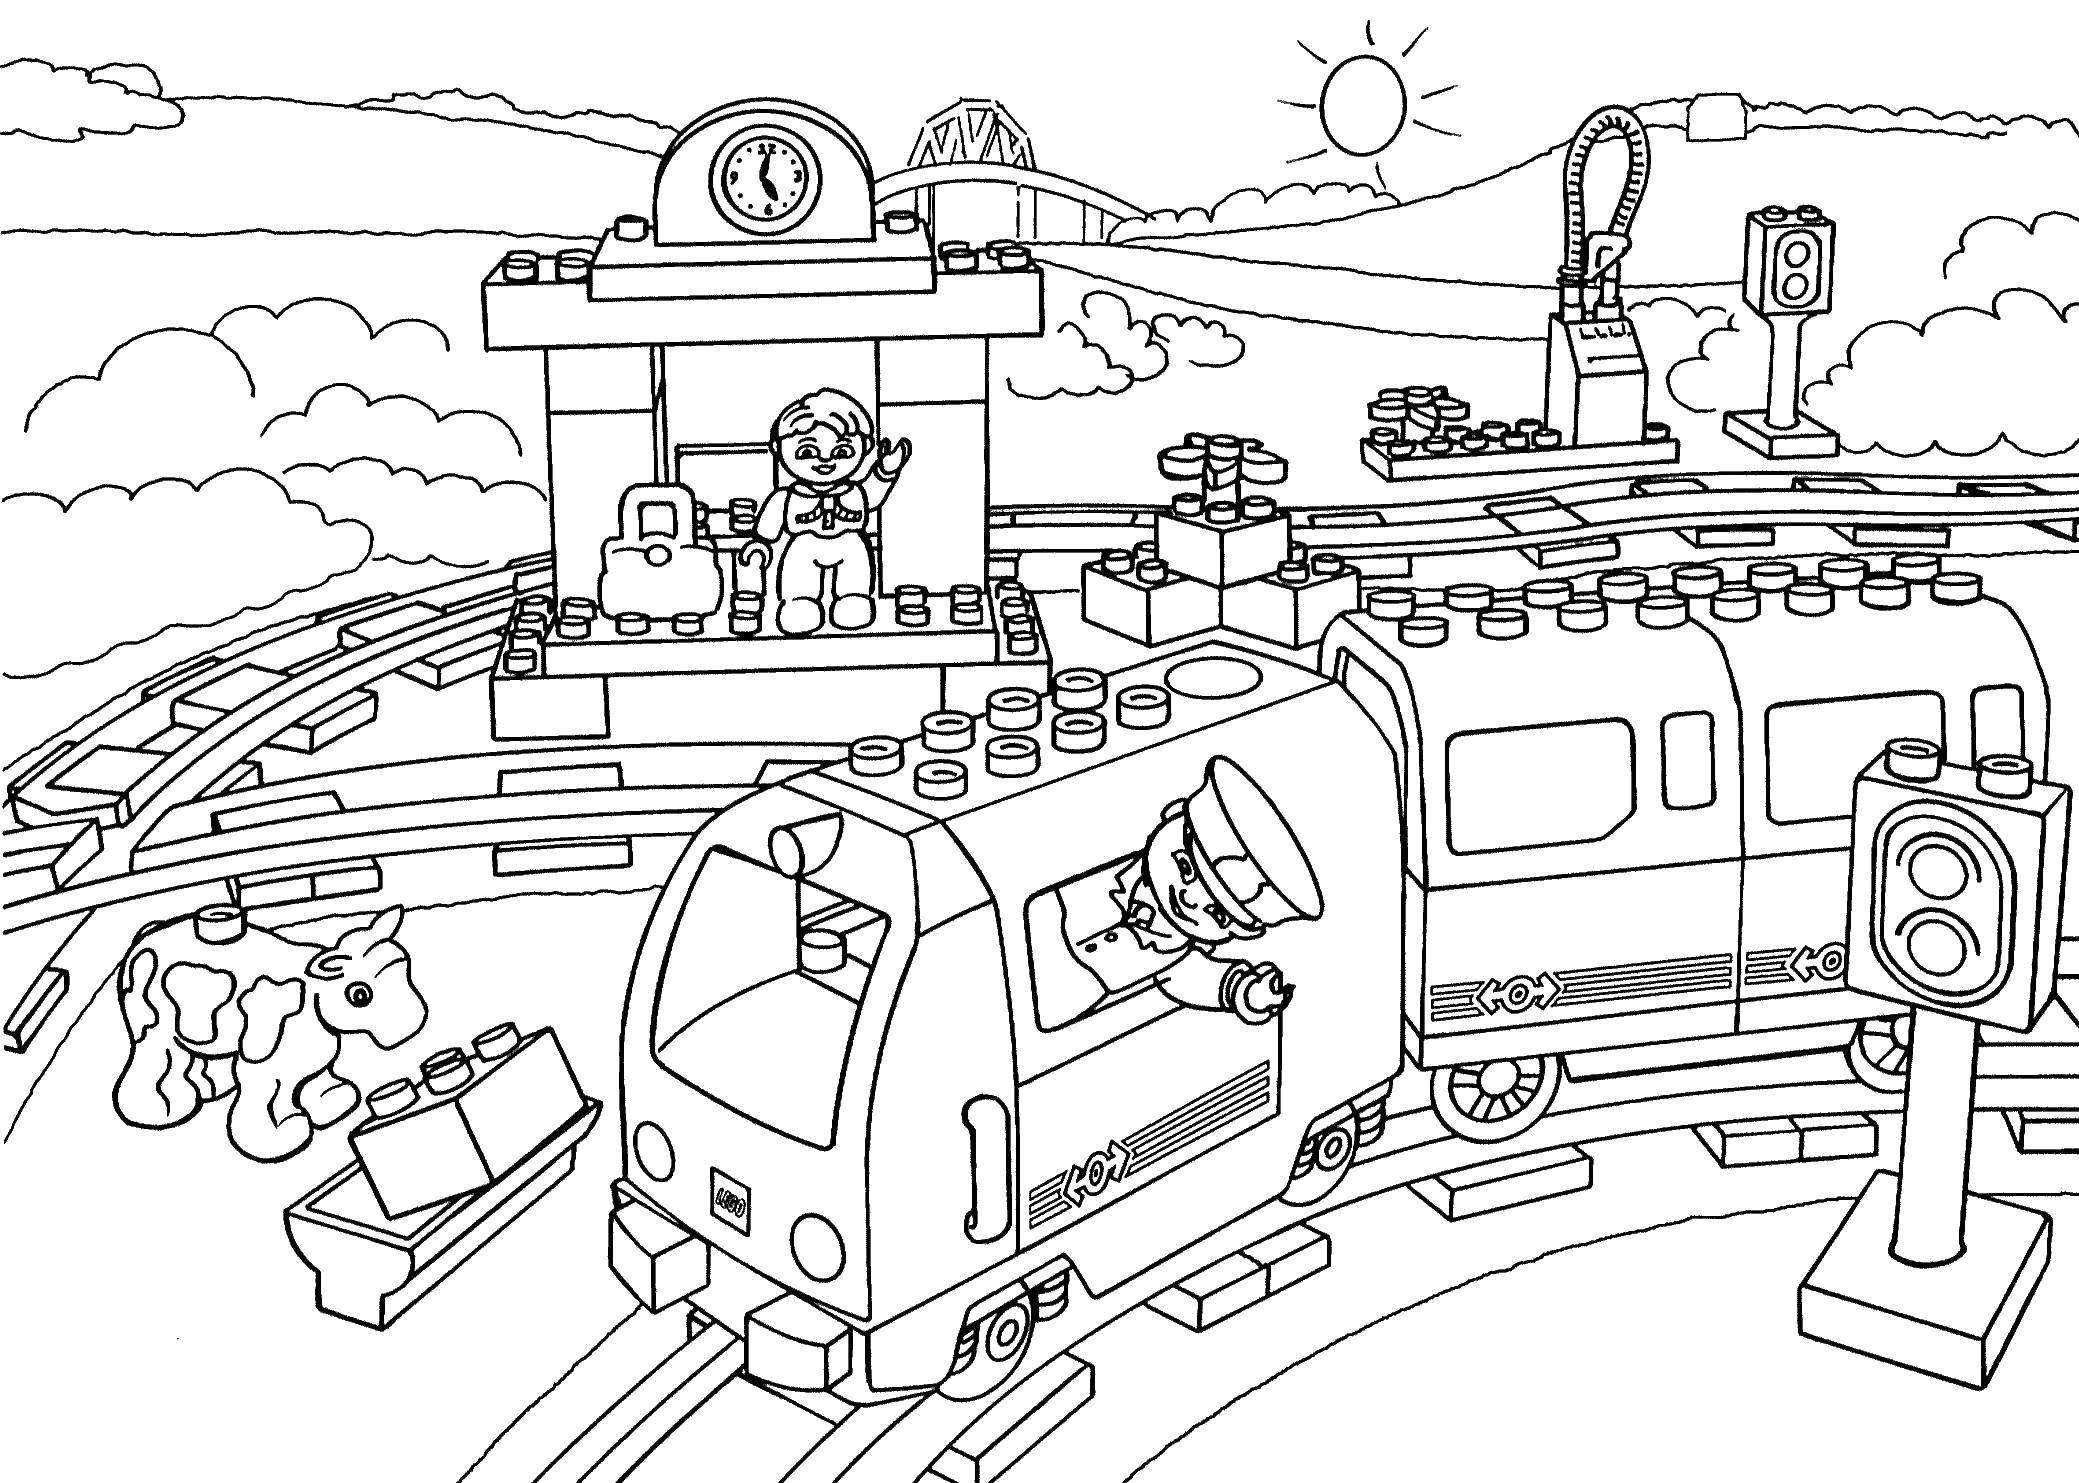 Coloring Railway LEGO. Category LEGO. Tags:  LEGO, designer, railroad, train.